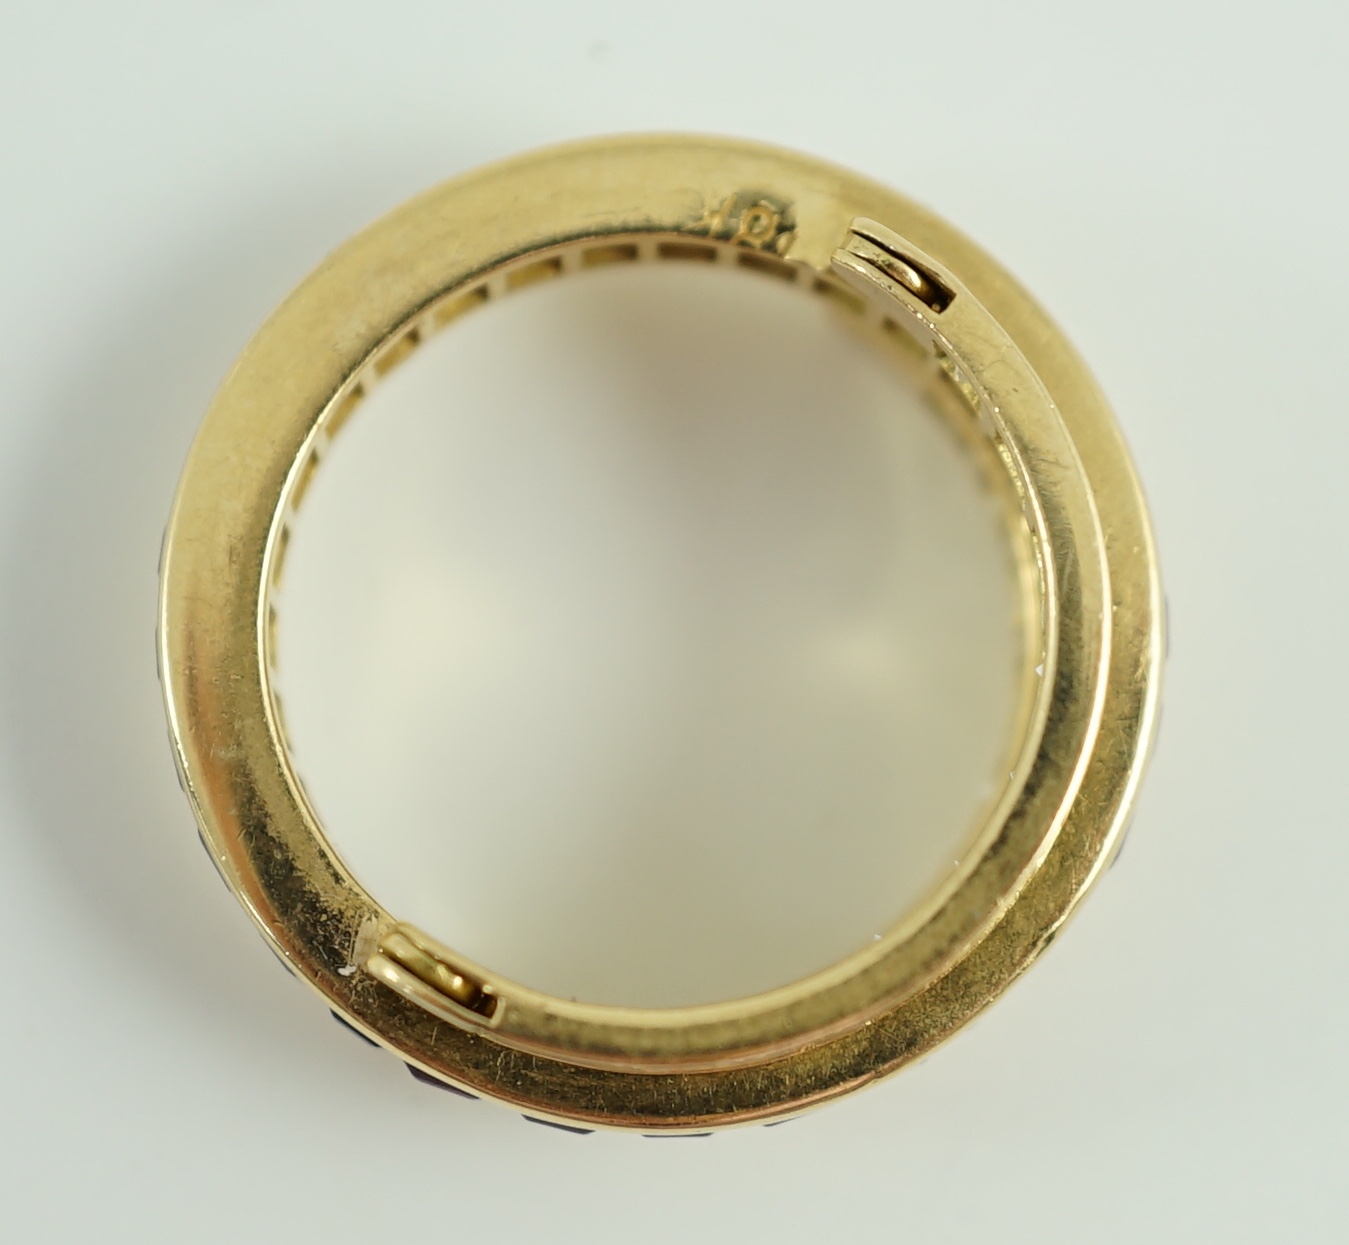 An 18k gold, ruby, sapphire and diamond set triple band swivel ring